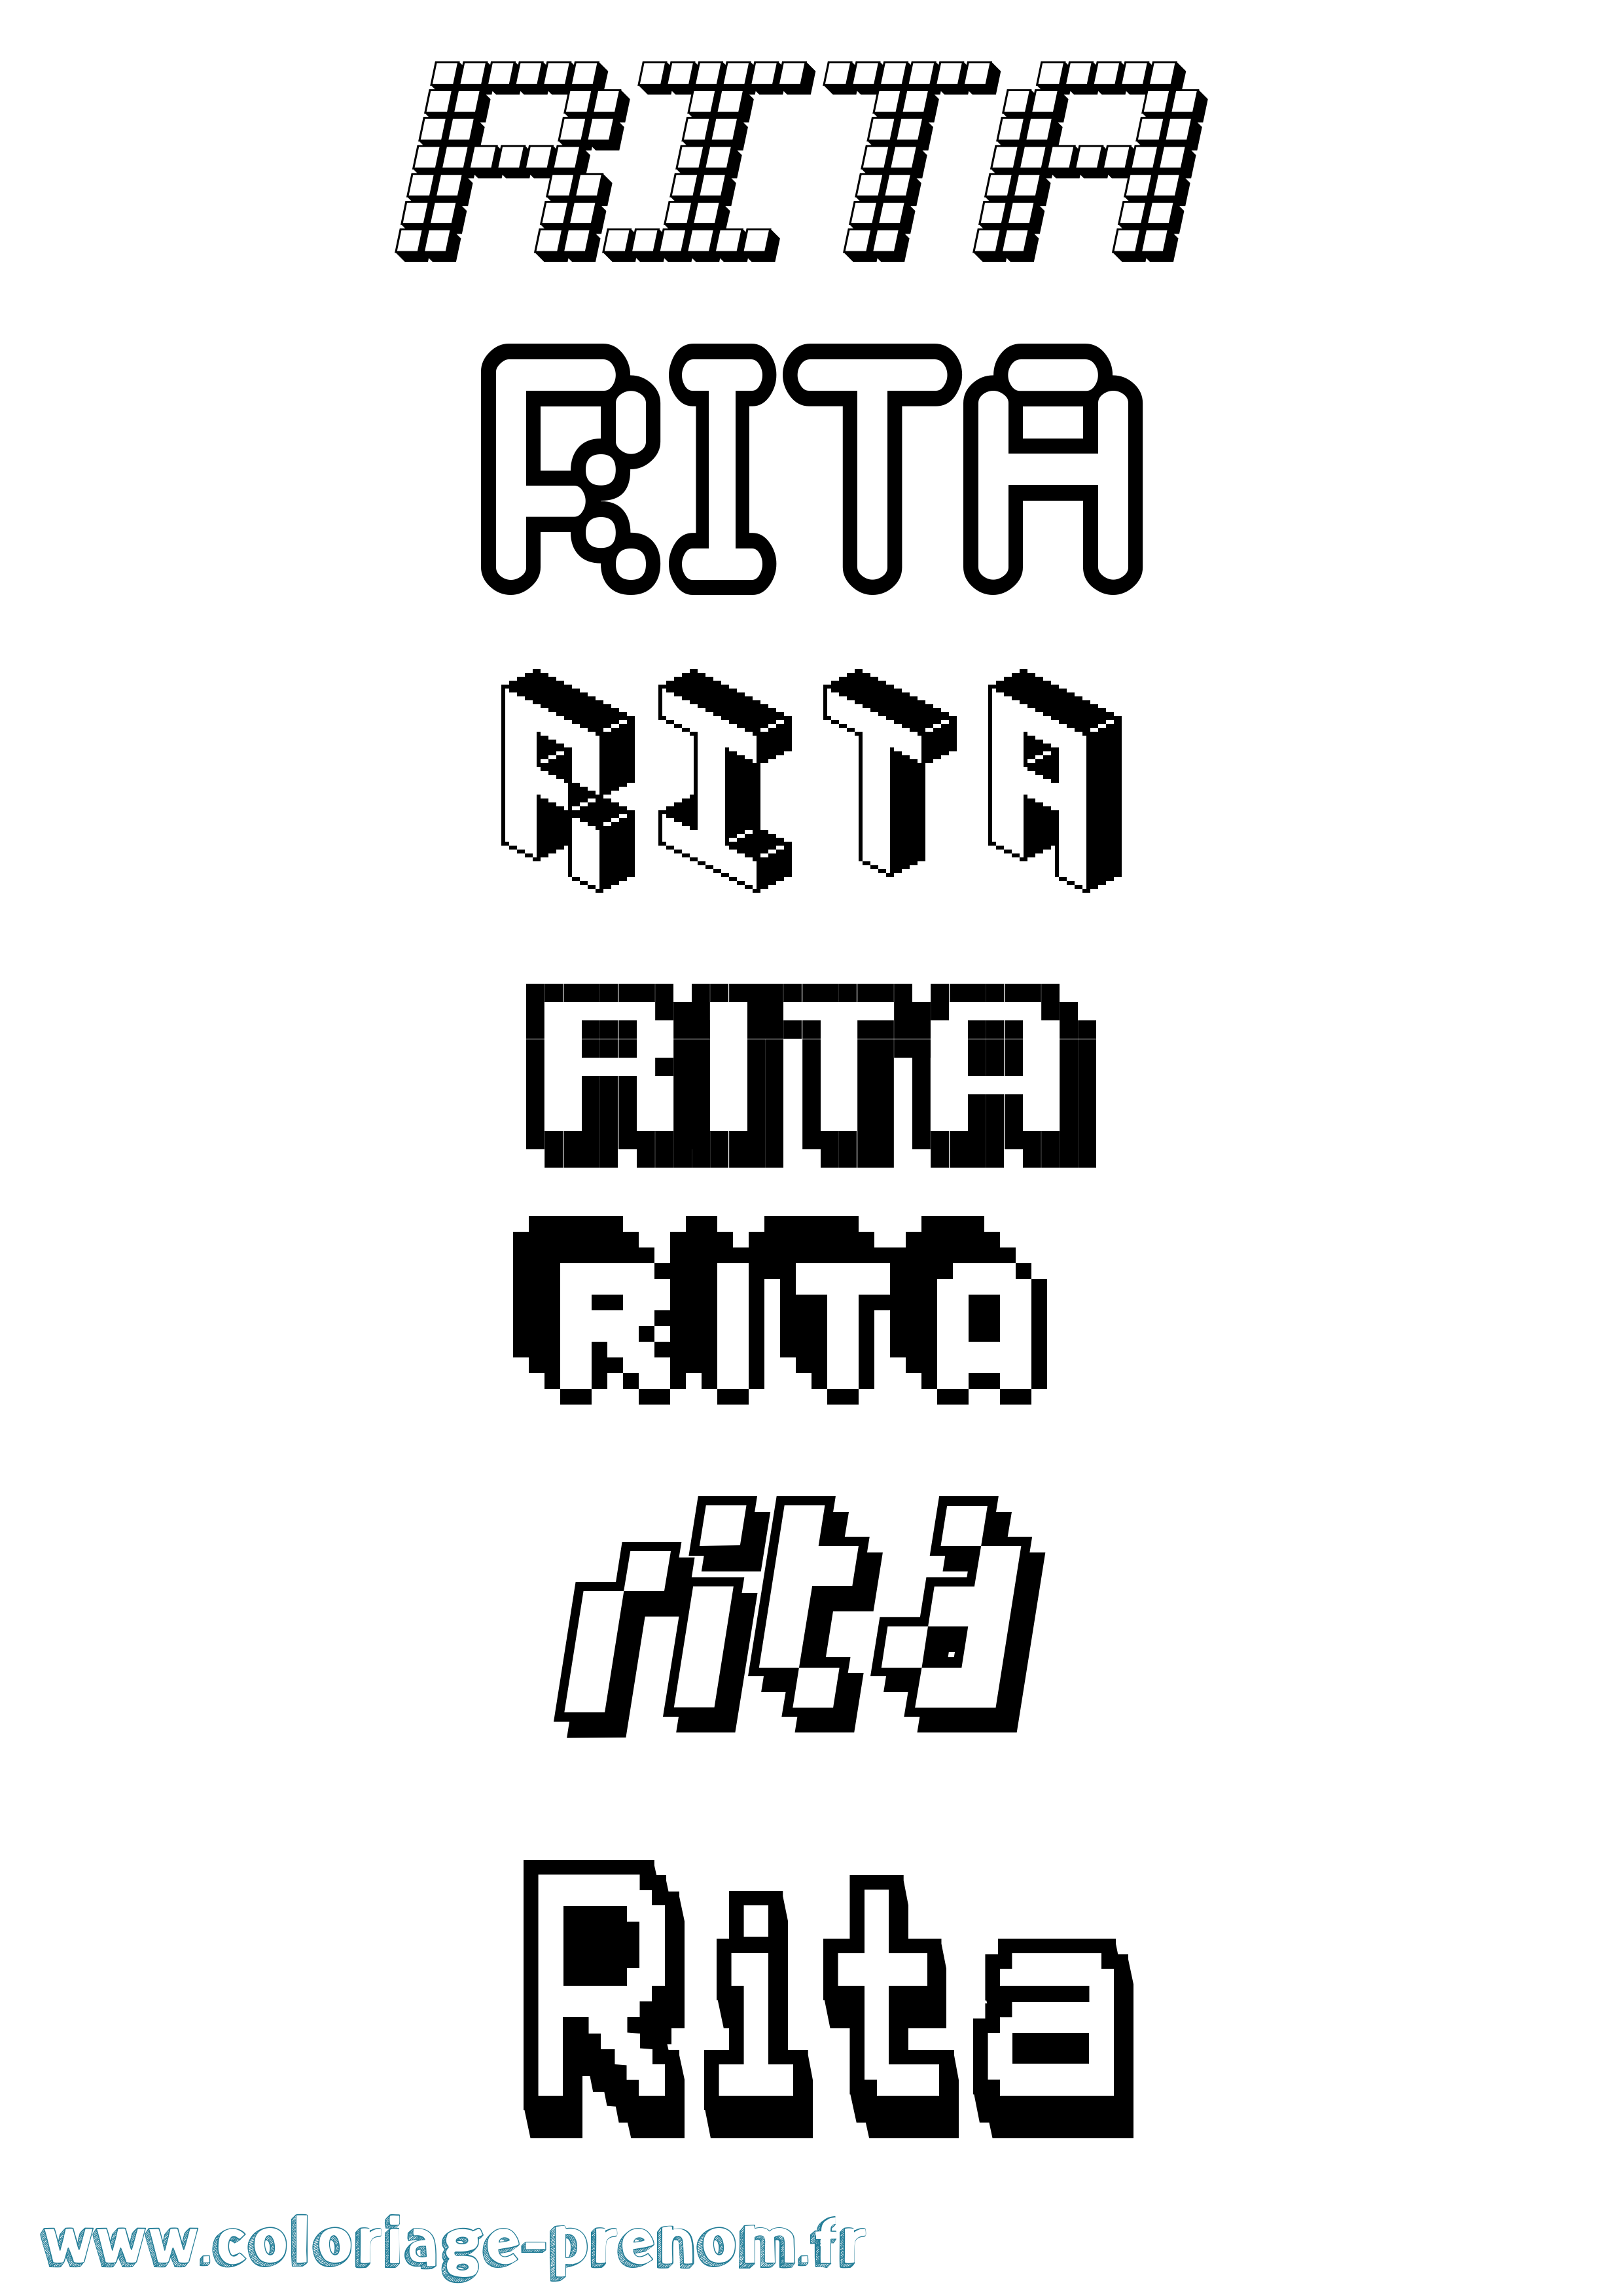 Coloriage prénom Rita Pixel